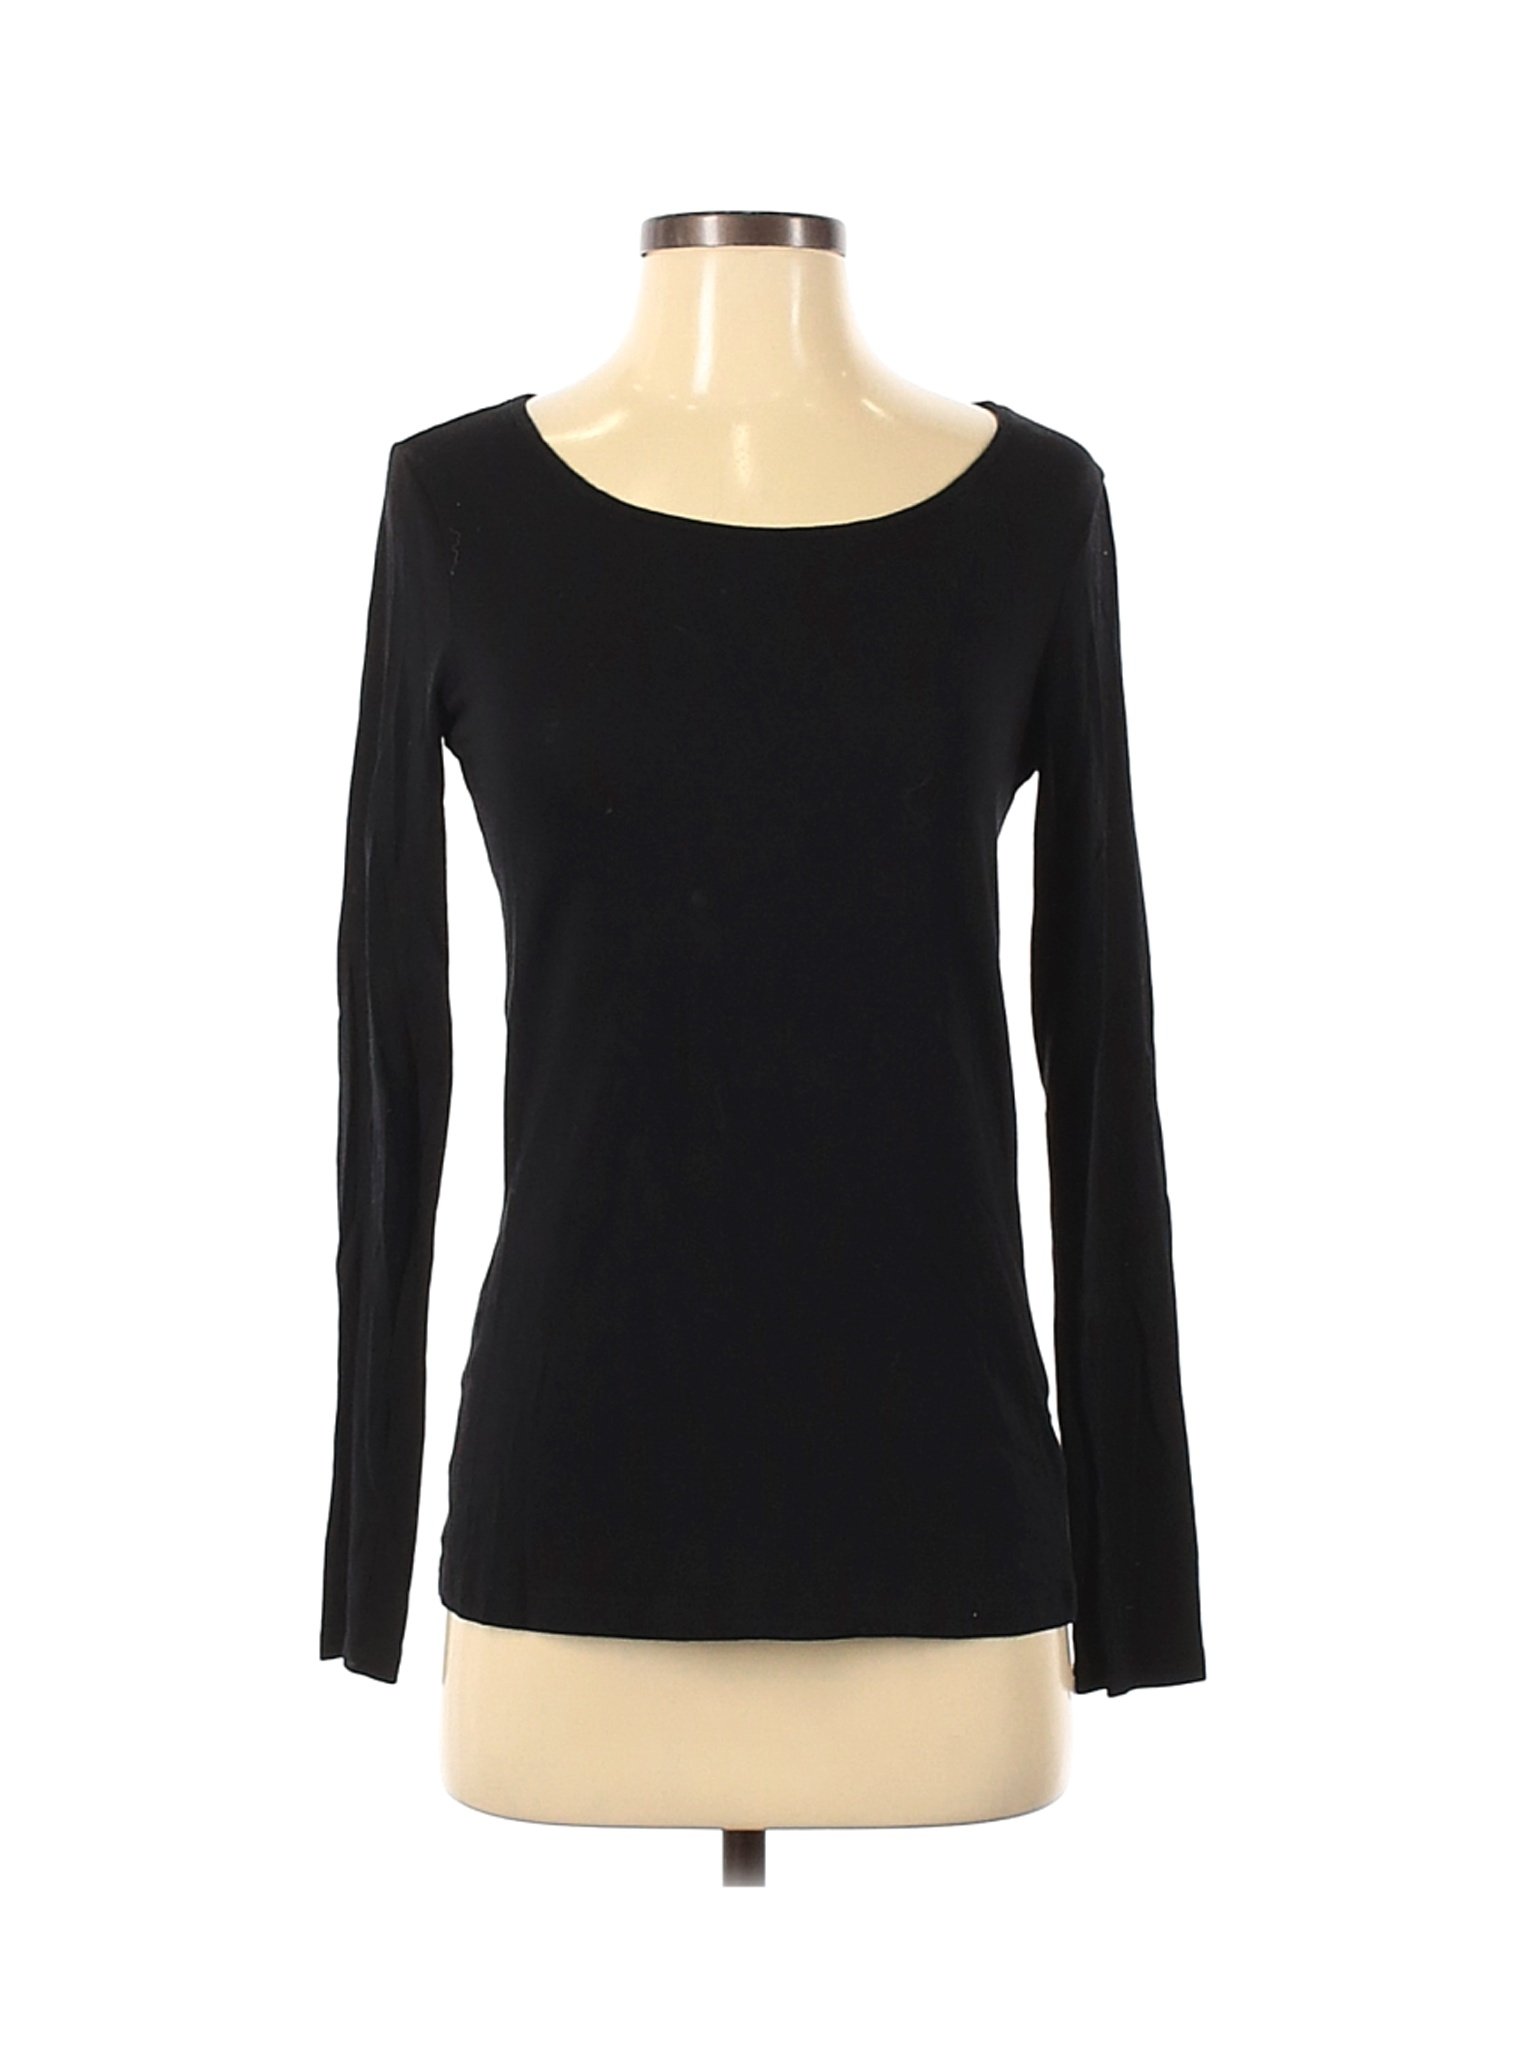 Apt. 9 Women Black Long Sleeve T-Shirt S | eBay